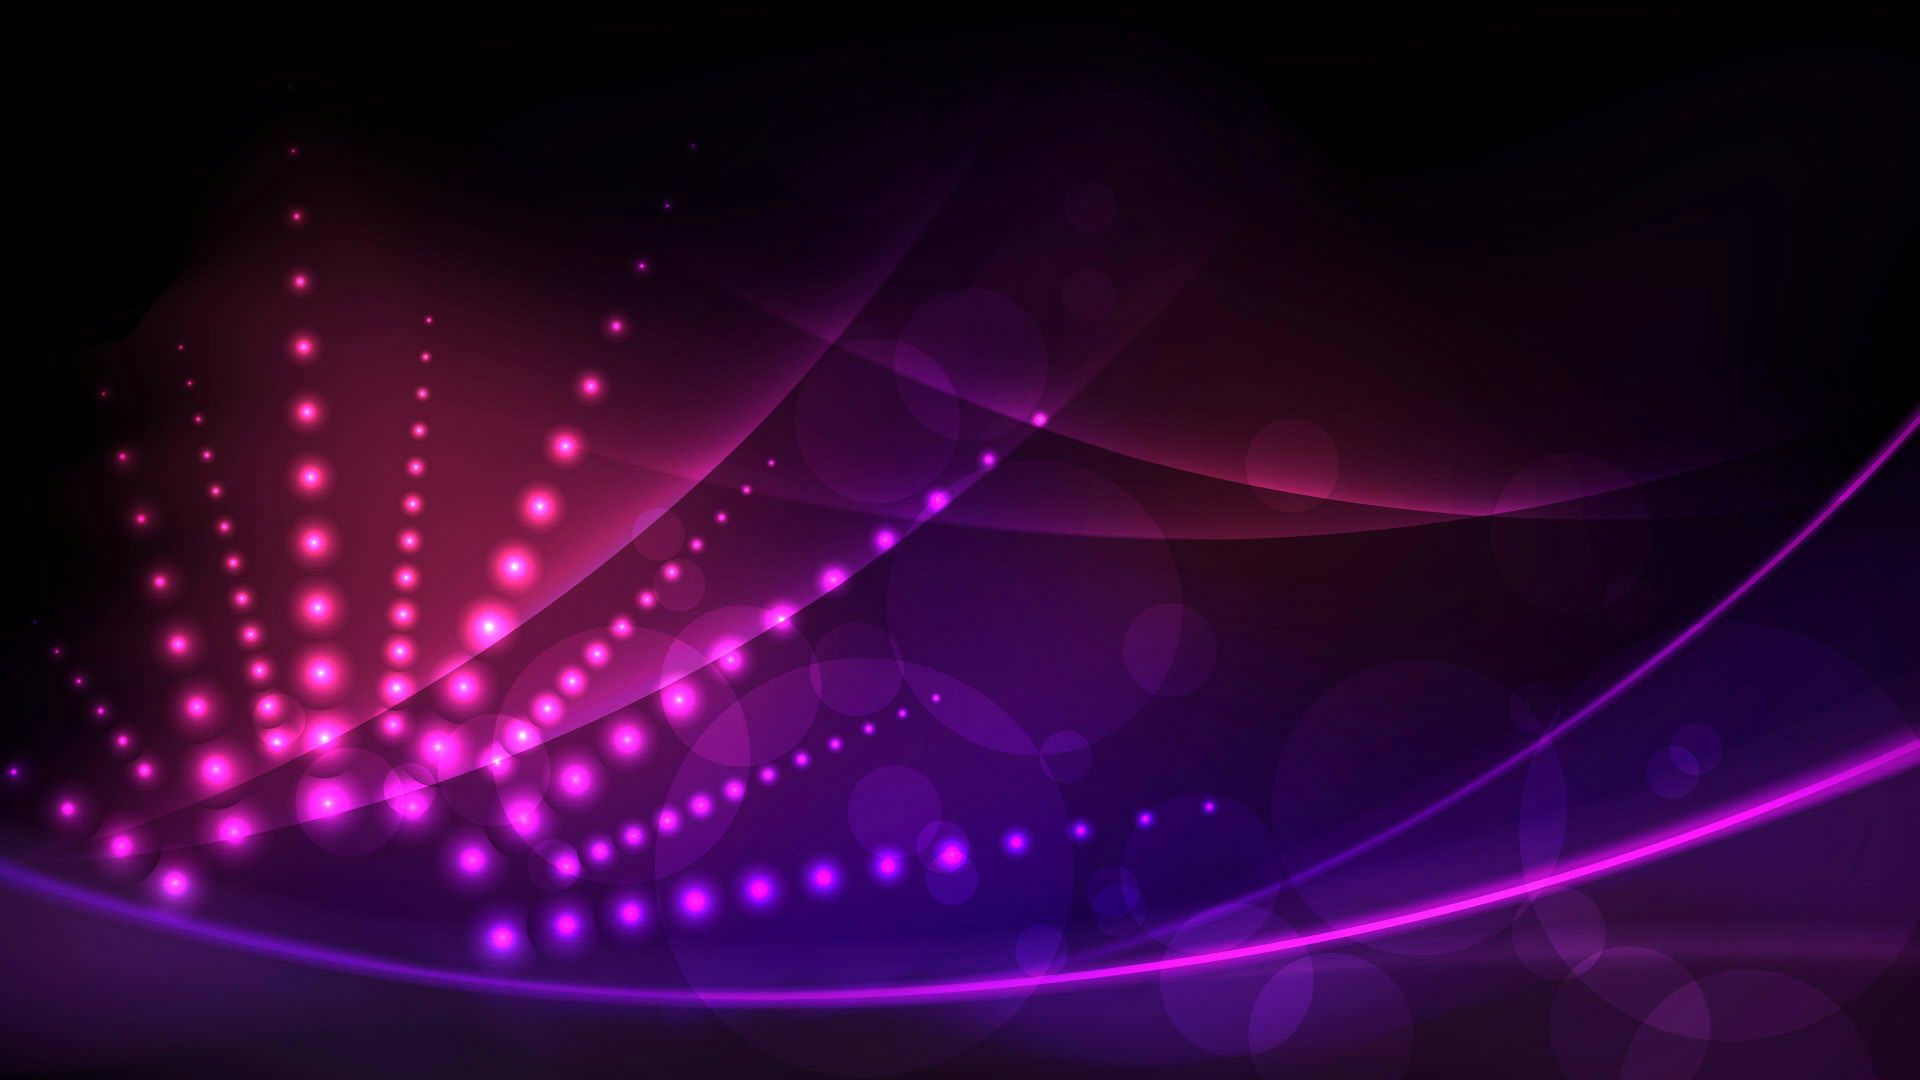 Background Purple